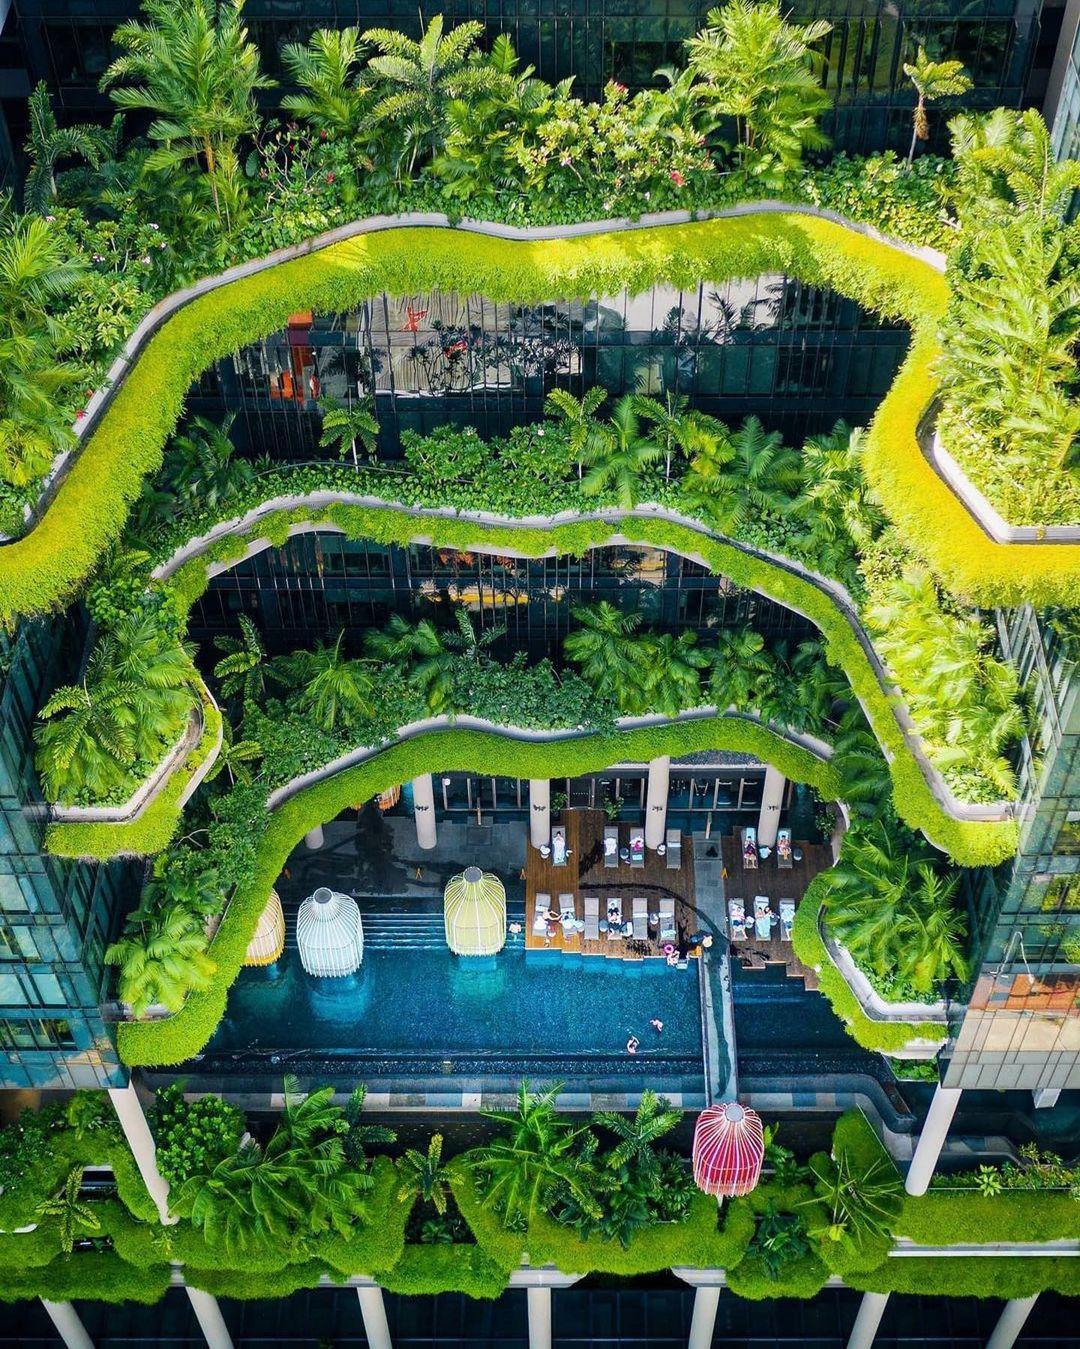 architecture photograpy hotel in a garden terraced garden parkroyal singapore by demas